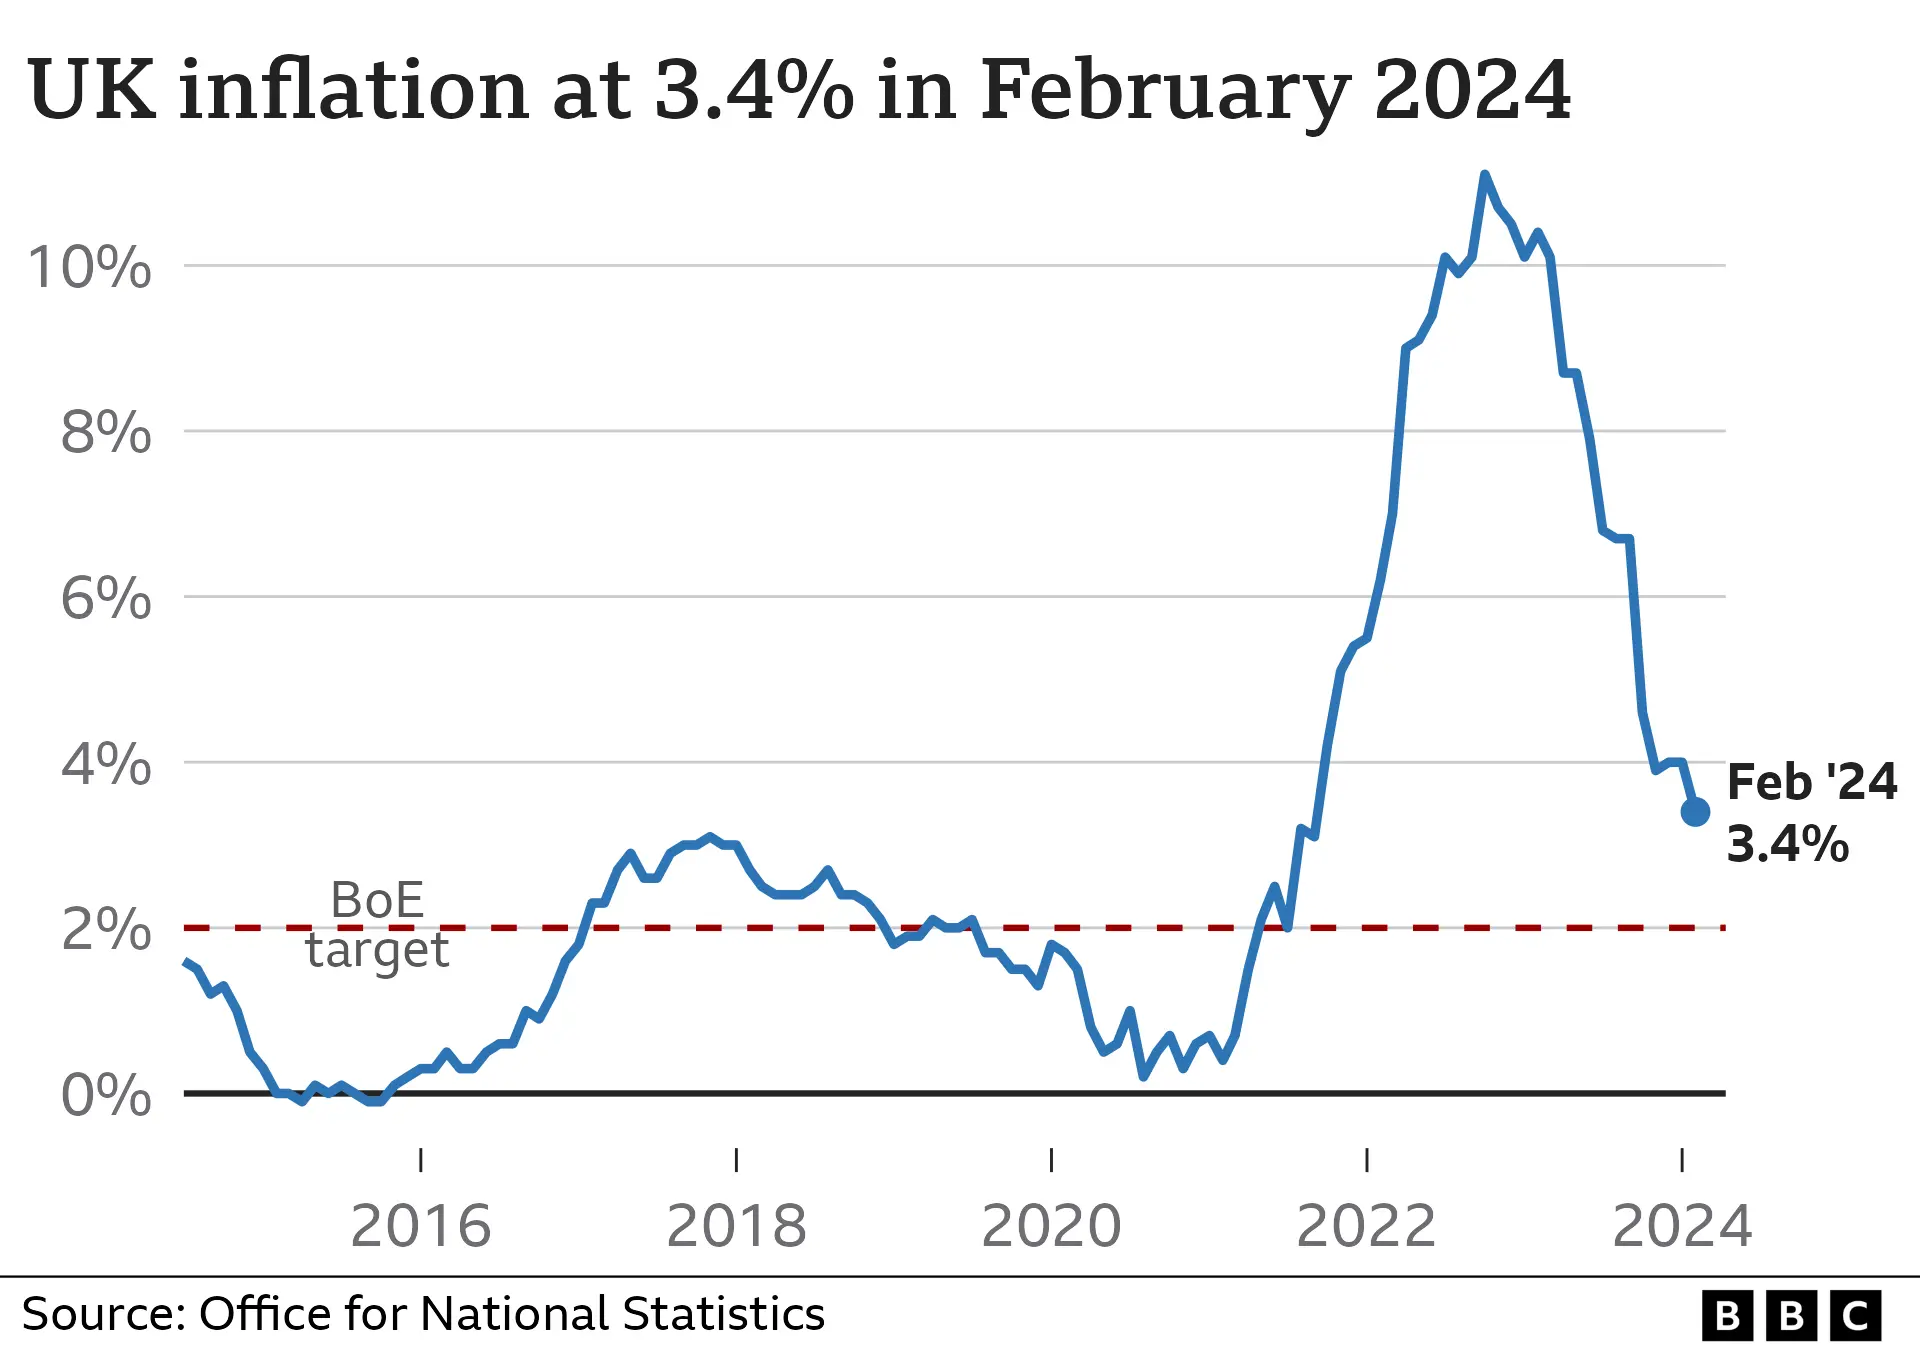 UK inflation chart